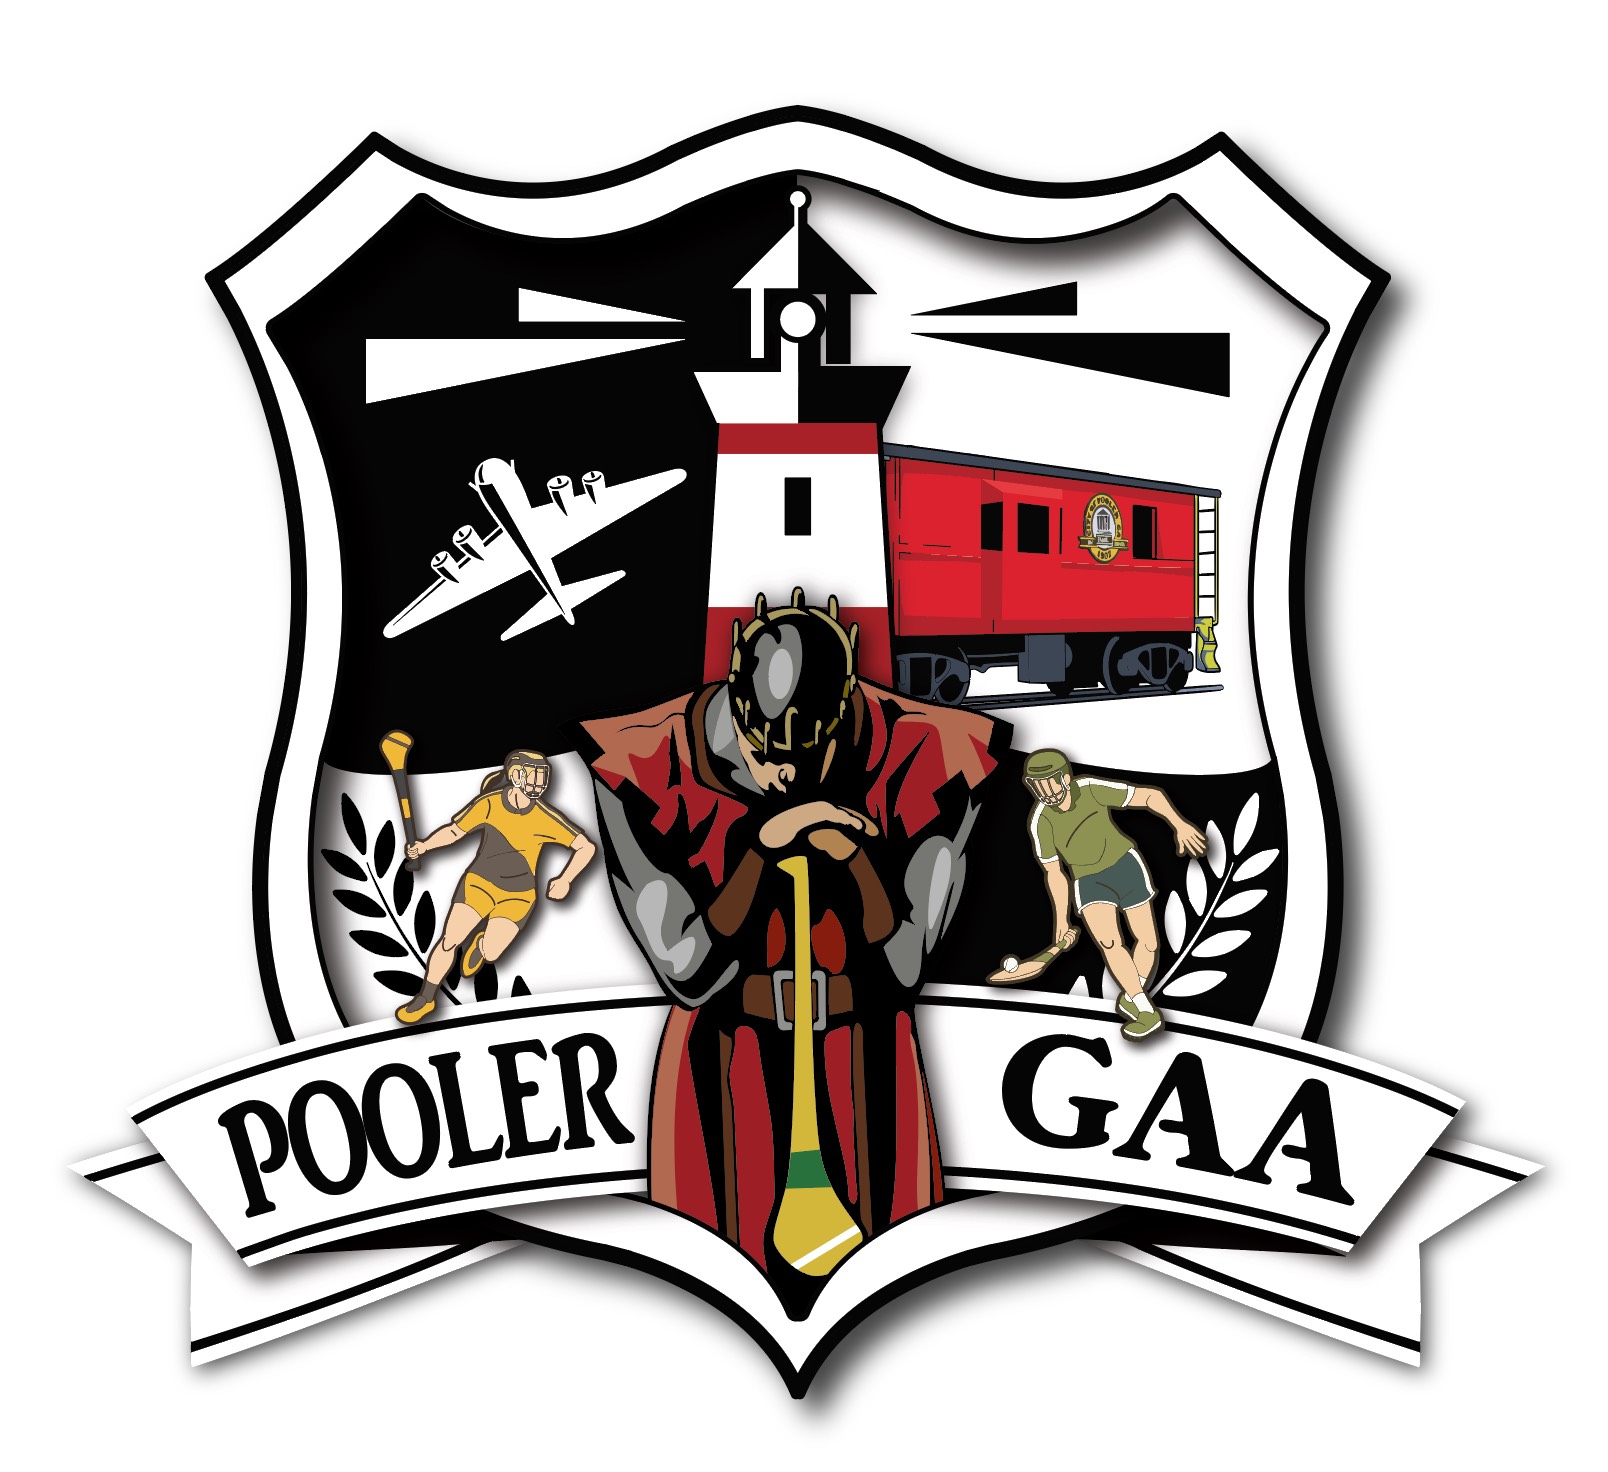 Pooler GA logo for DS of Coastal.jpg